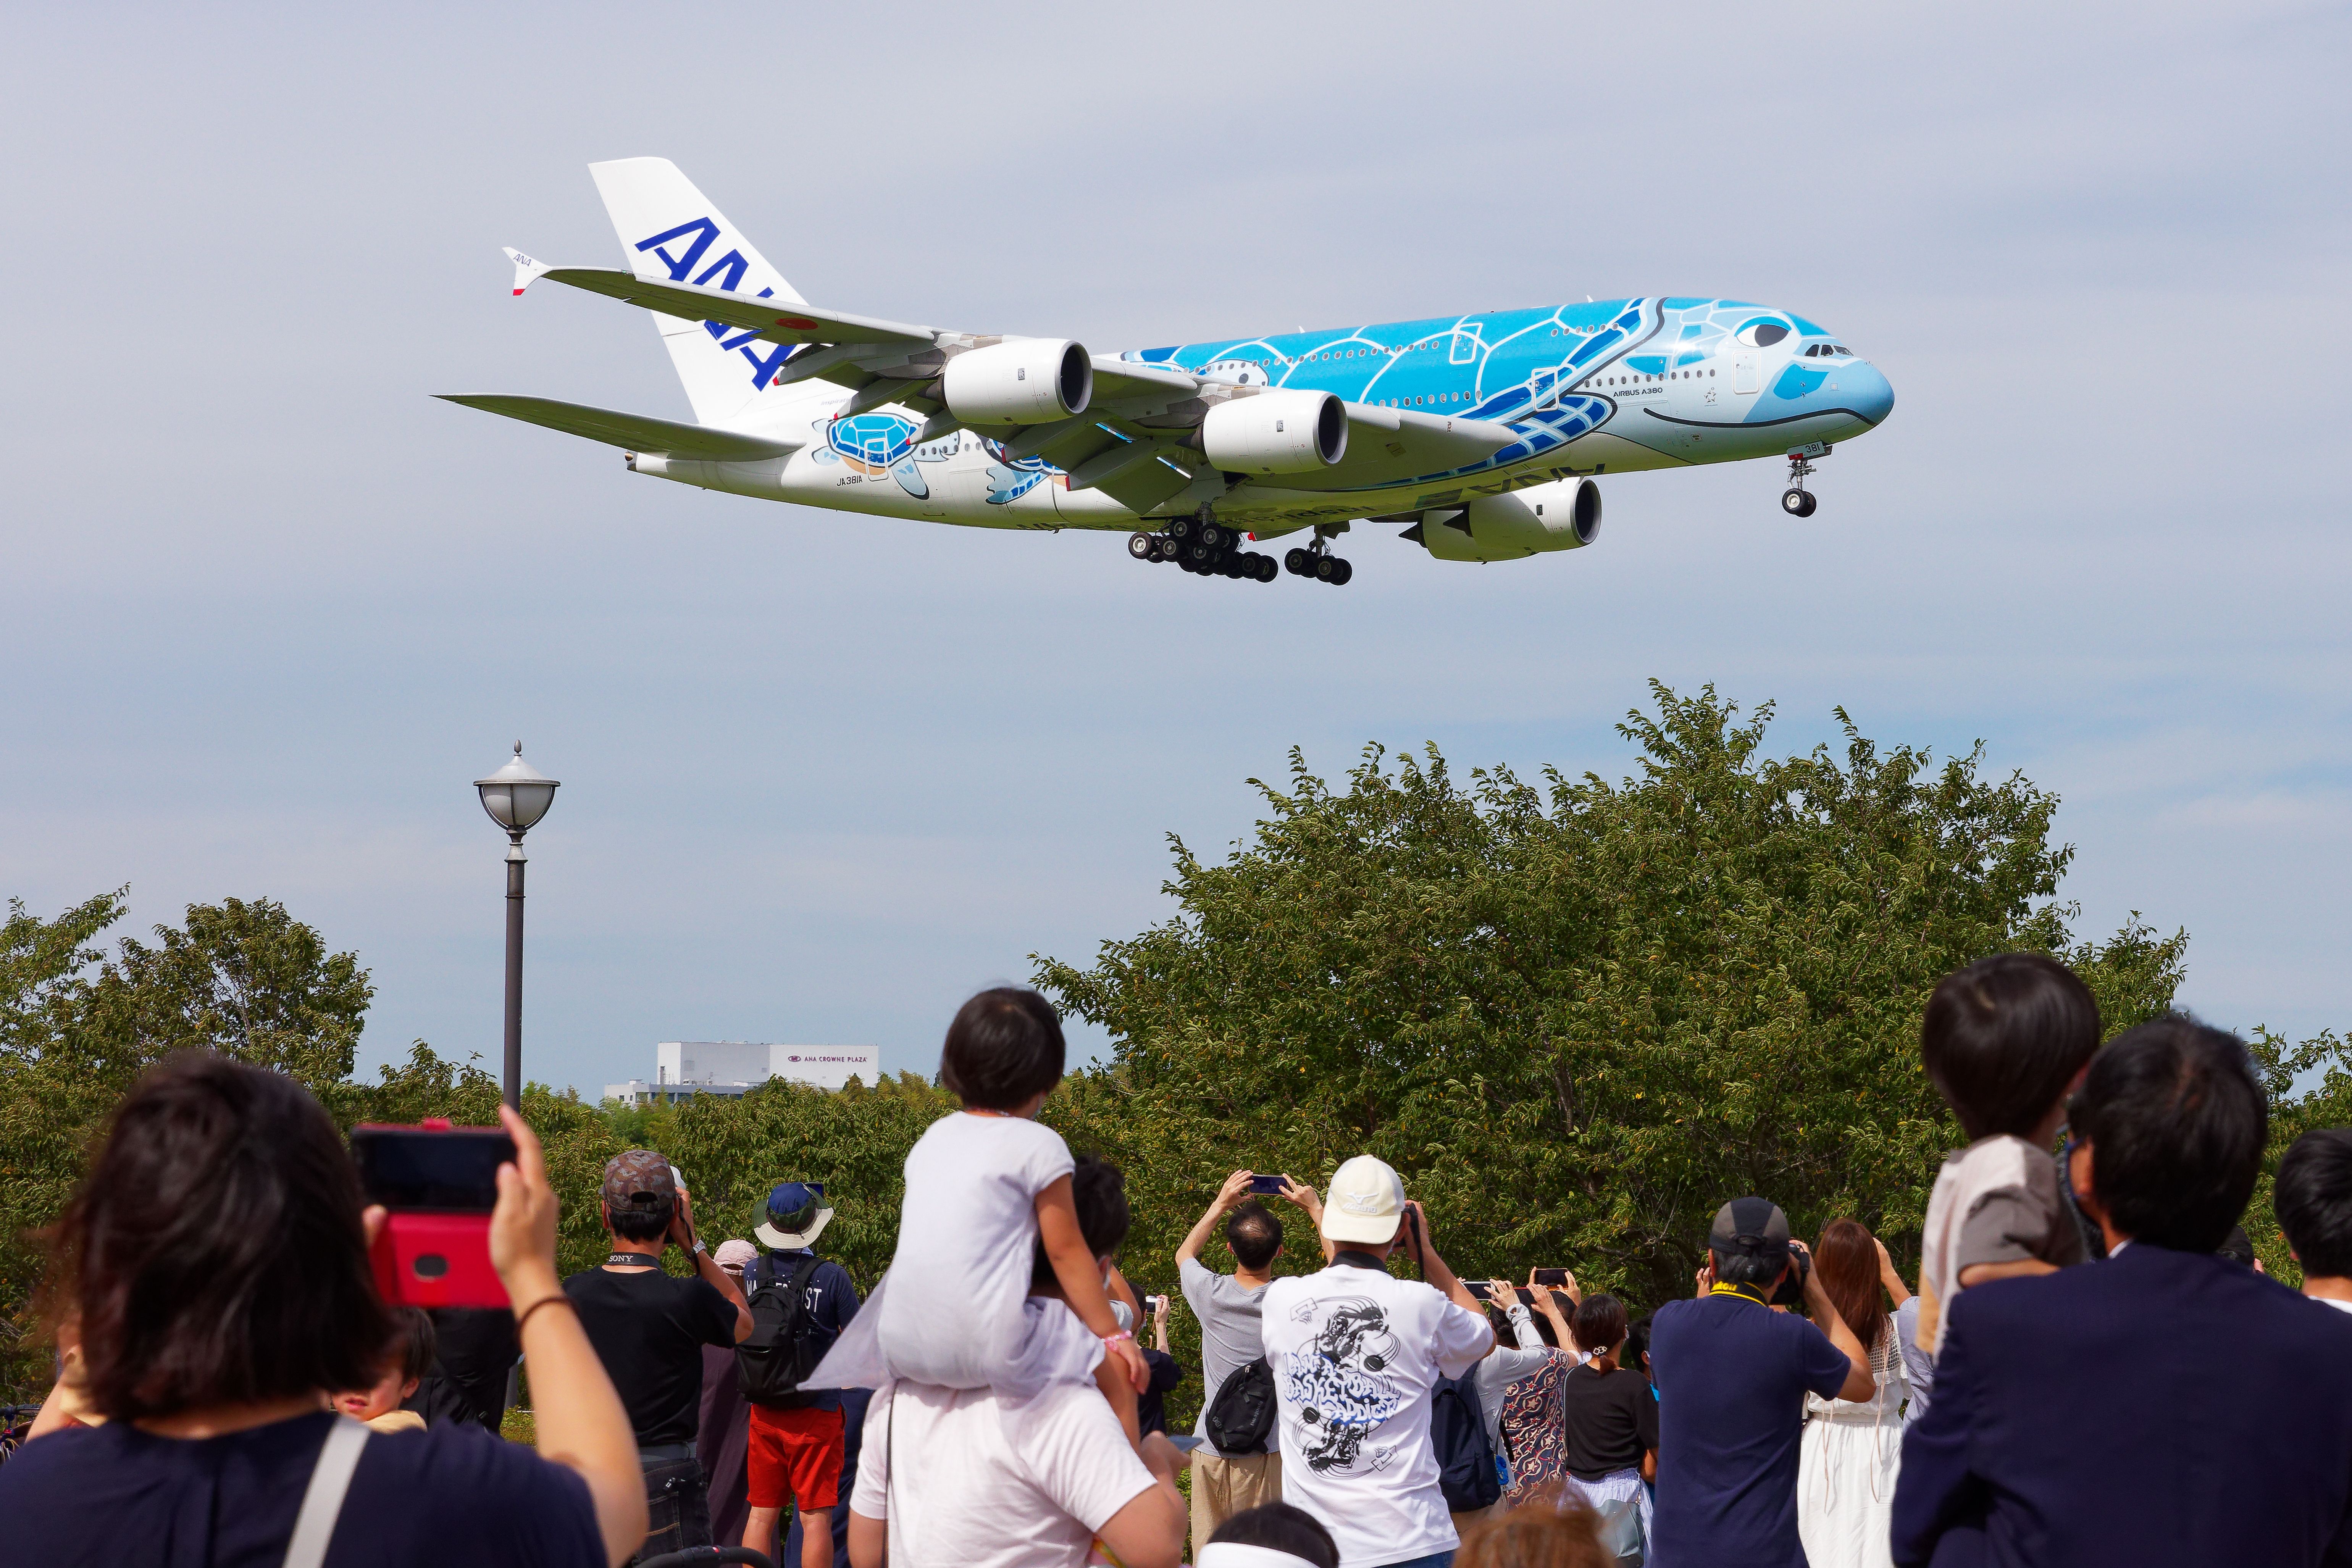 ANA's Airbus A380 landing